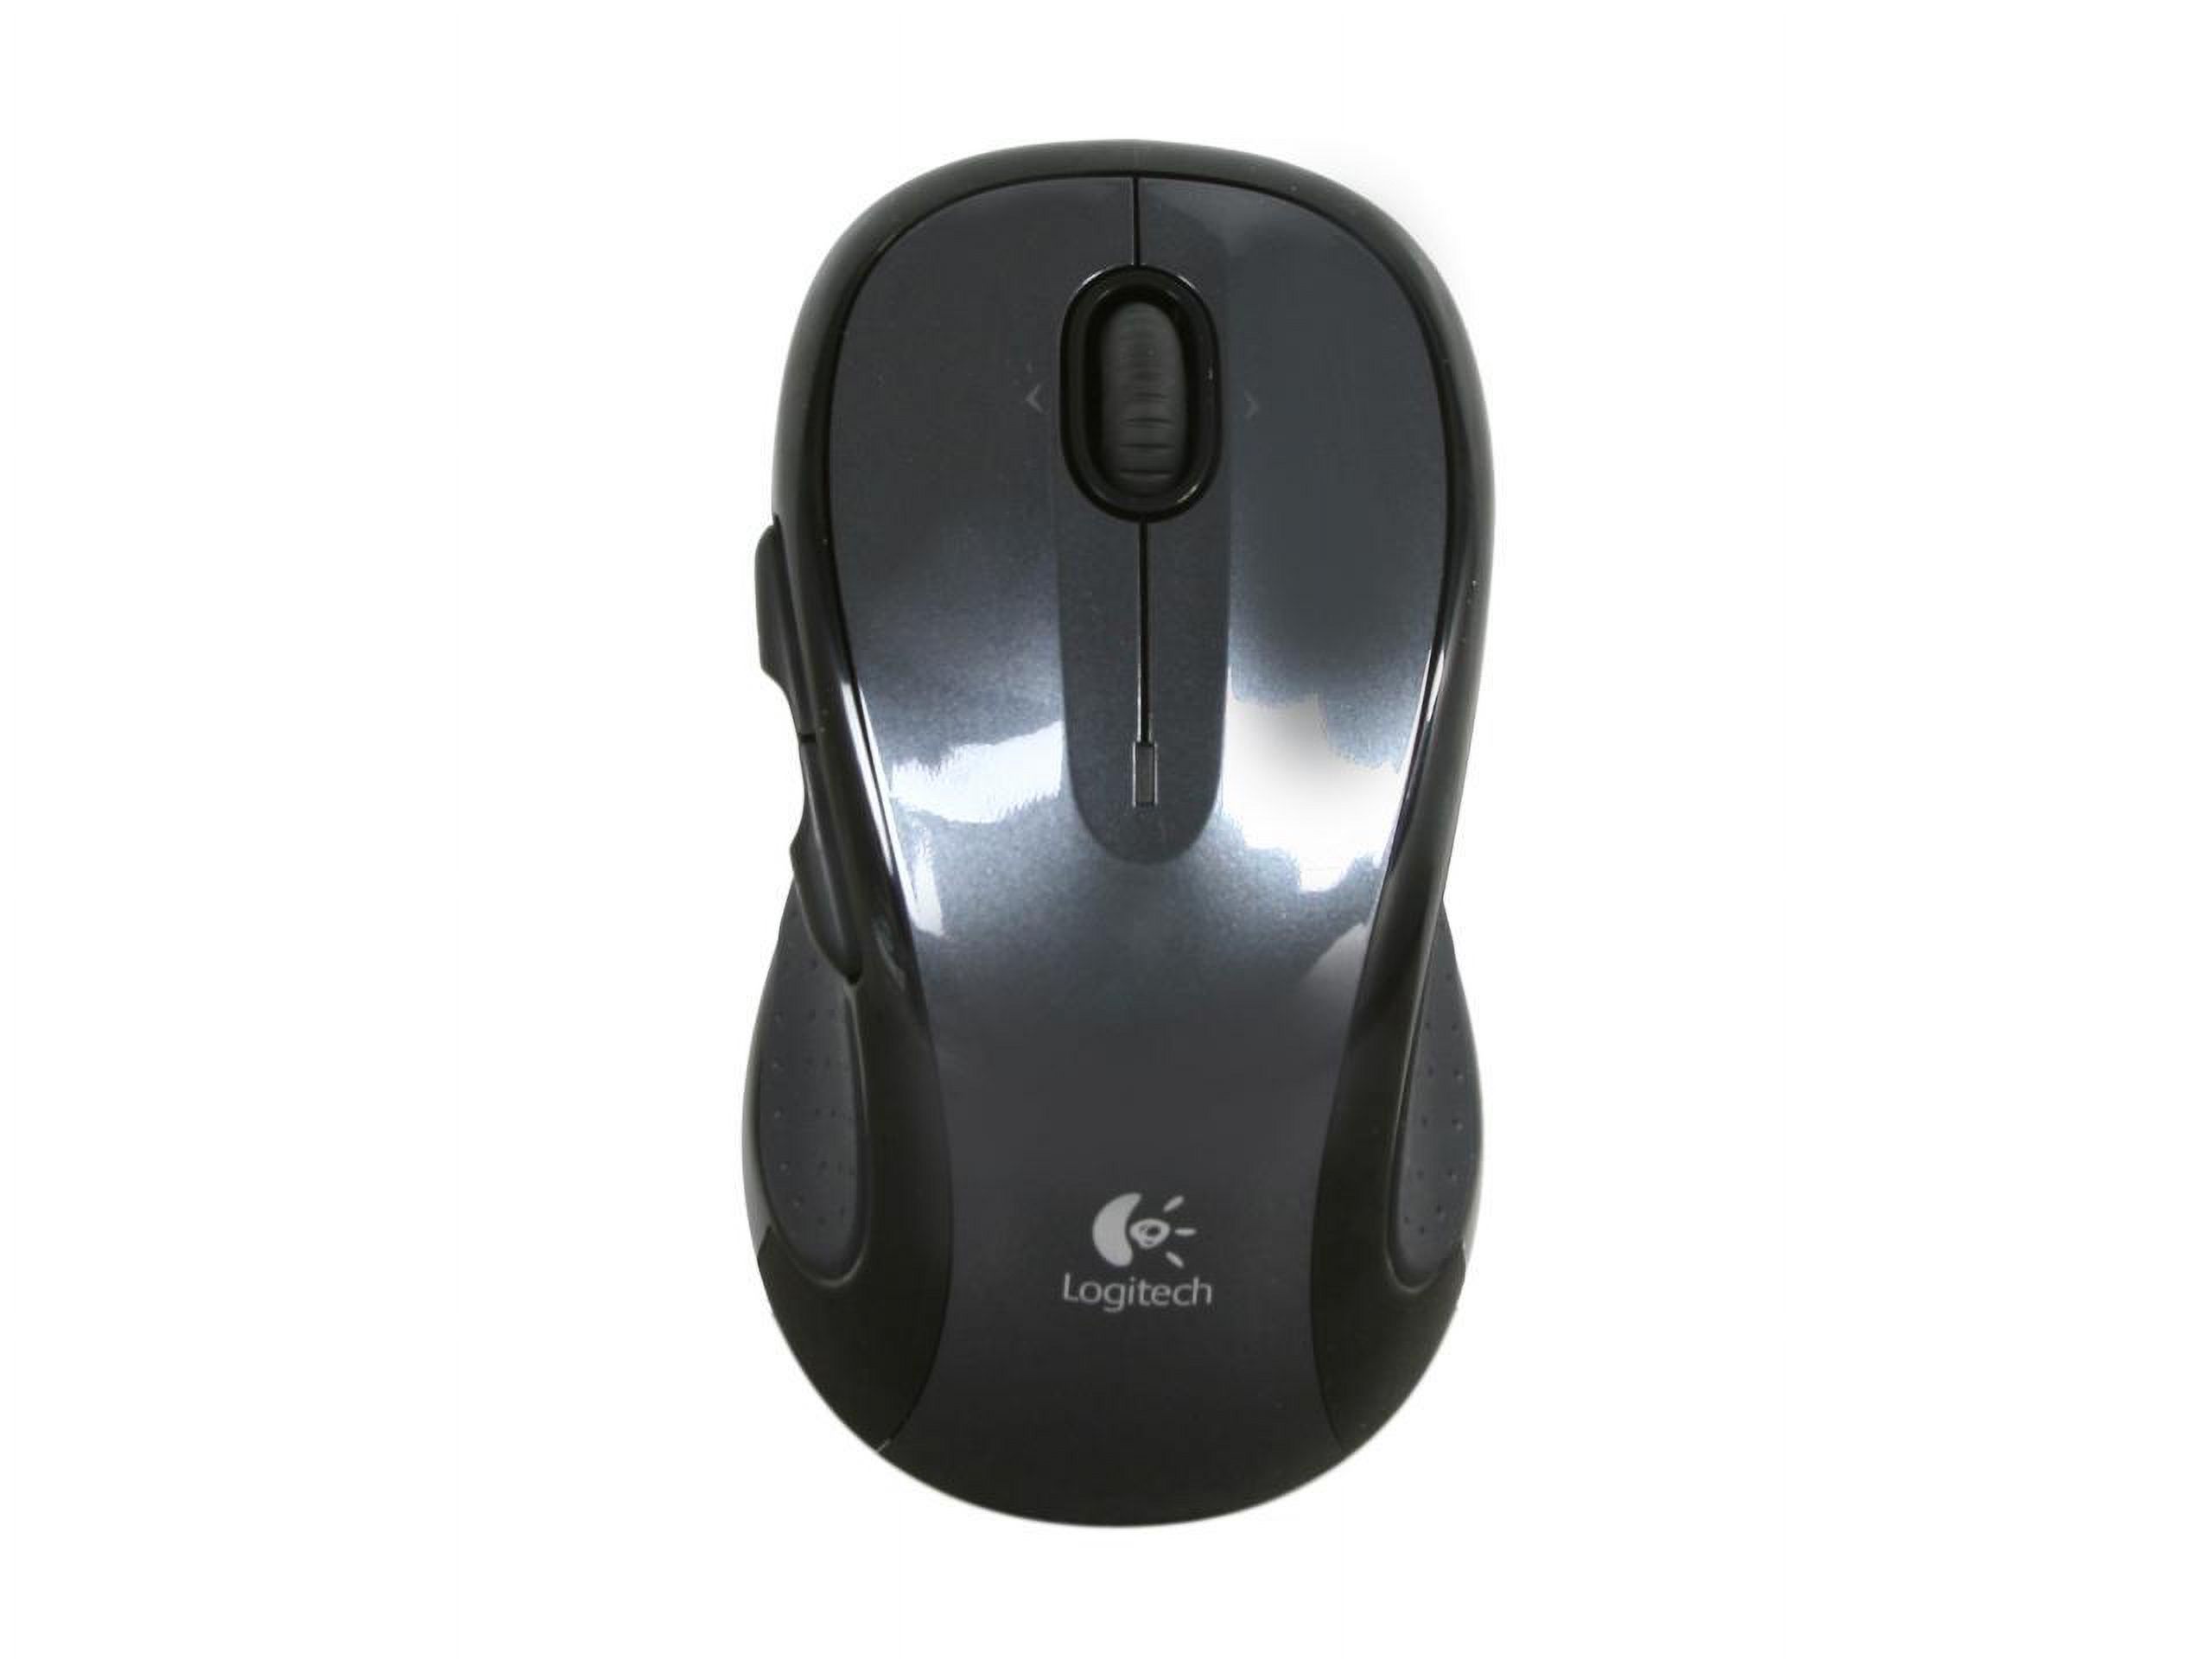 Logitech Wireless Mouse M510 - image 3 of 7